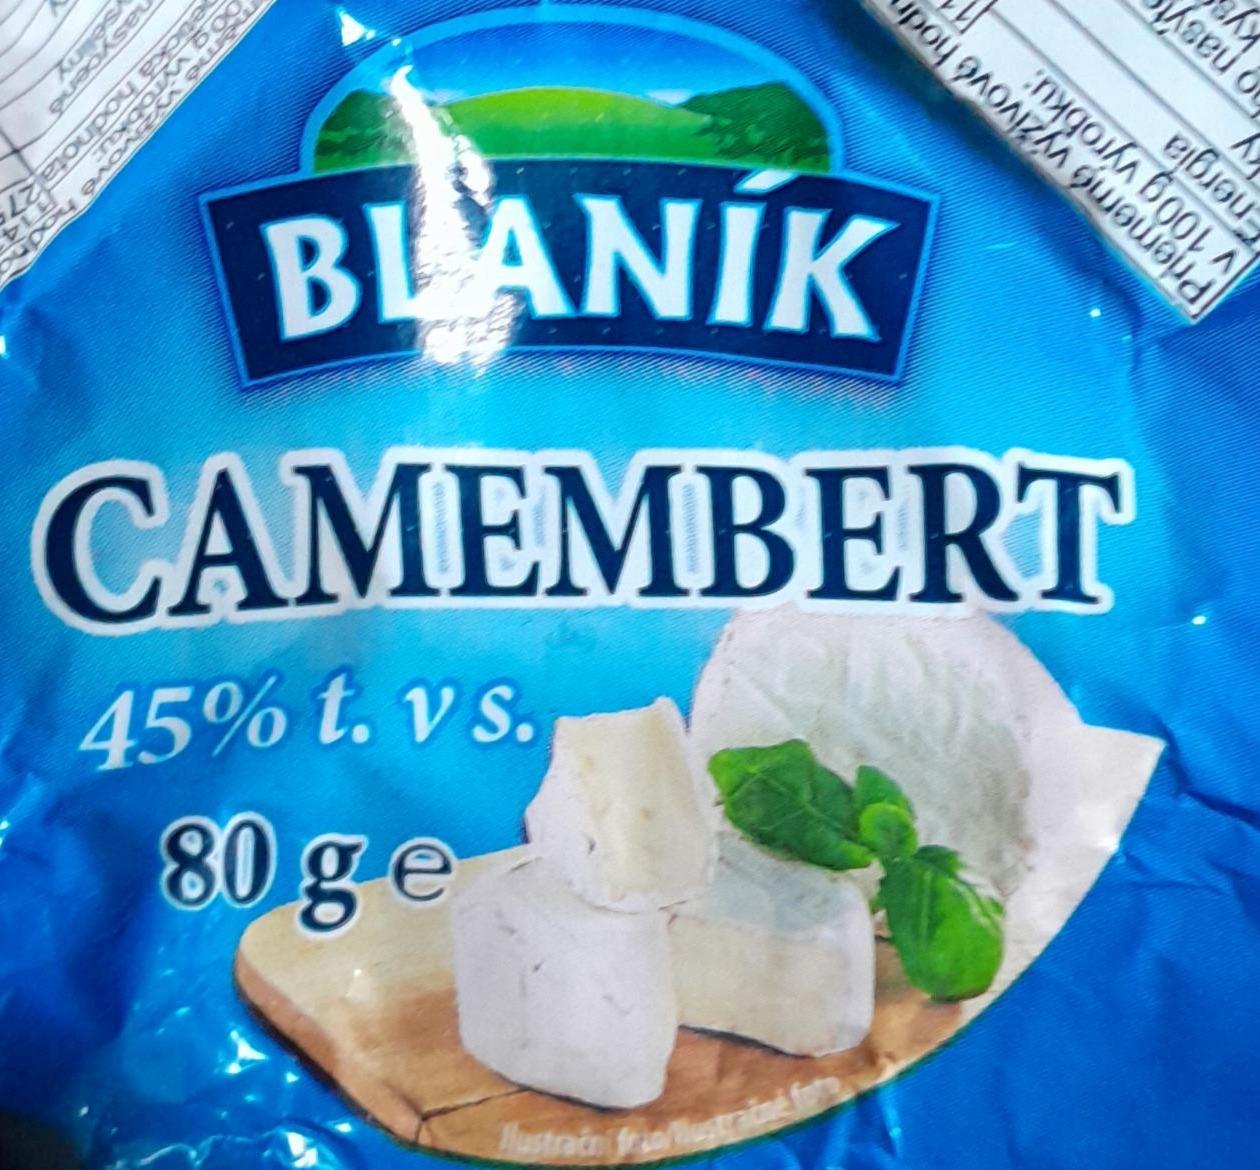 Фото - Сир 45% жиру Camembert Blaník